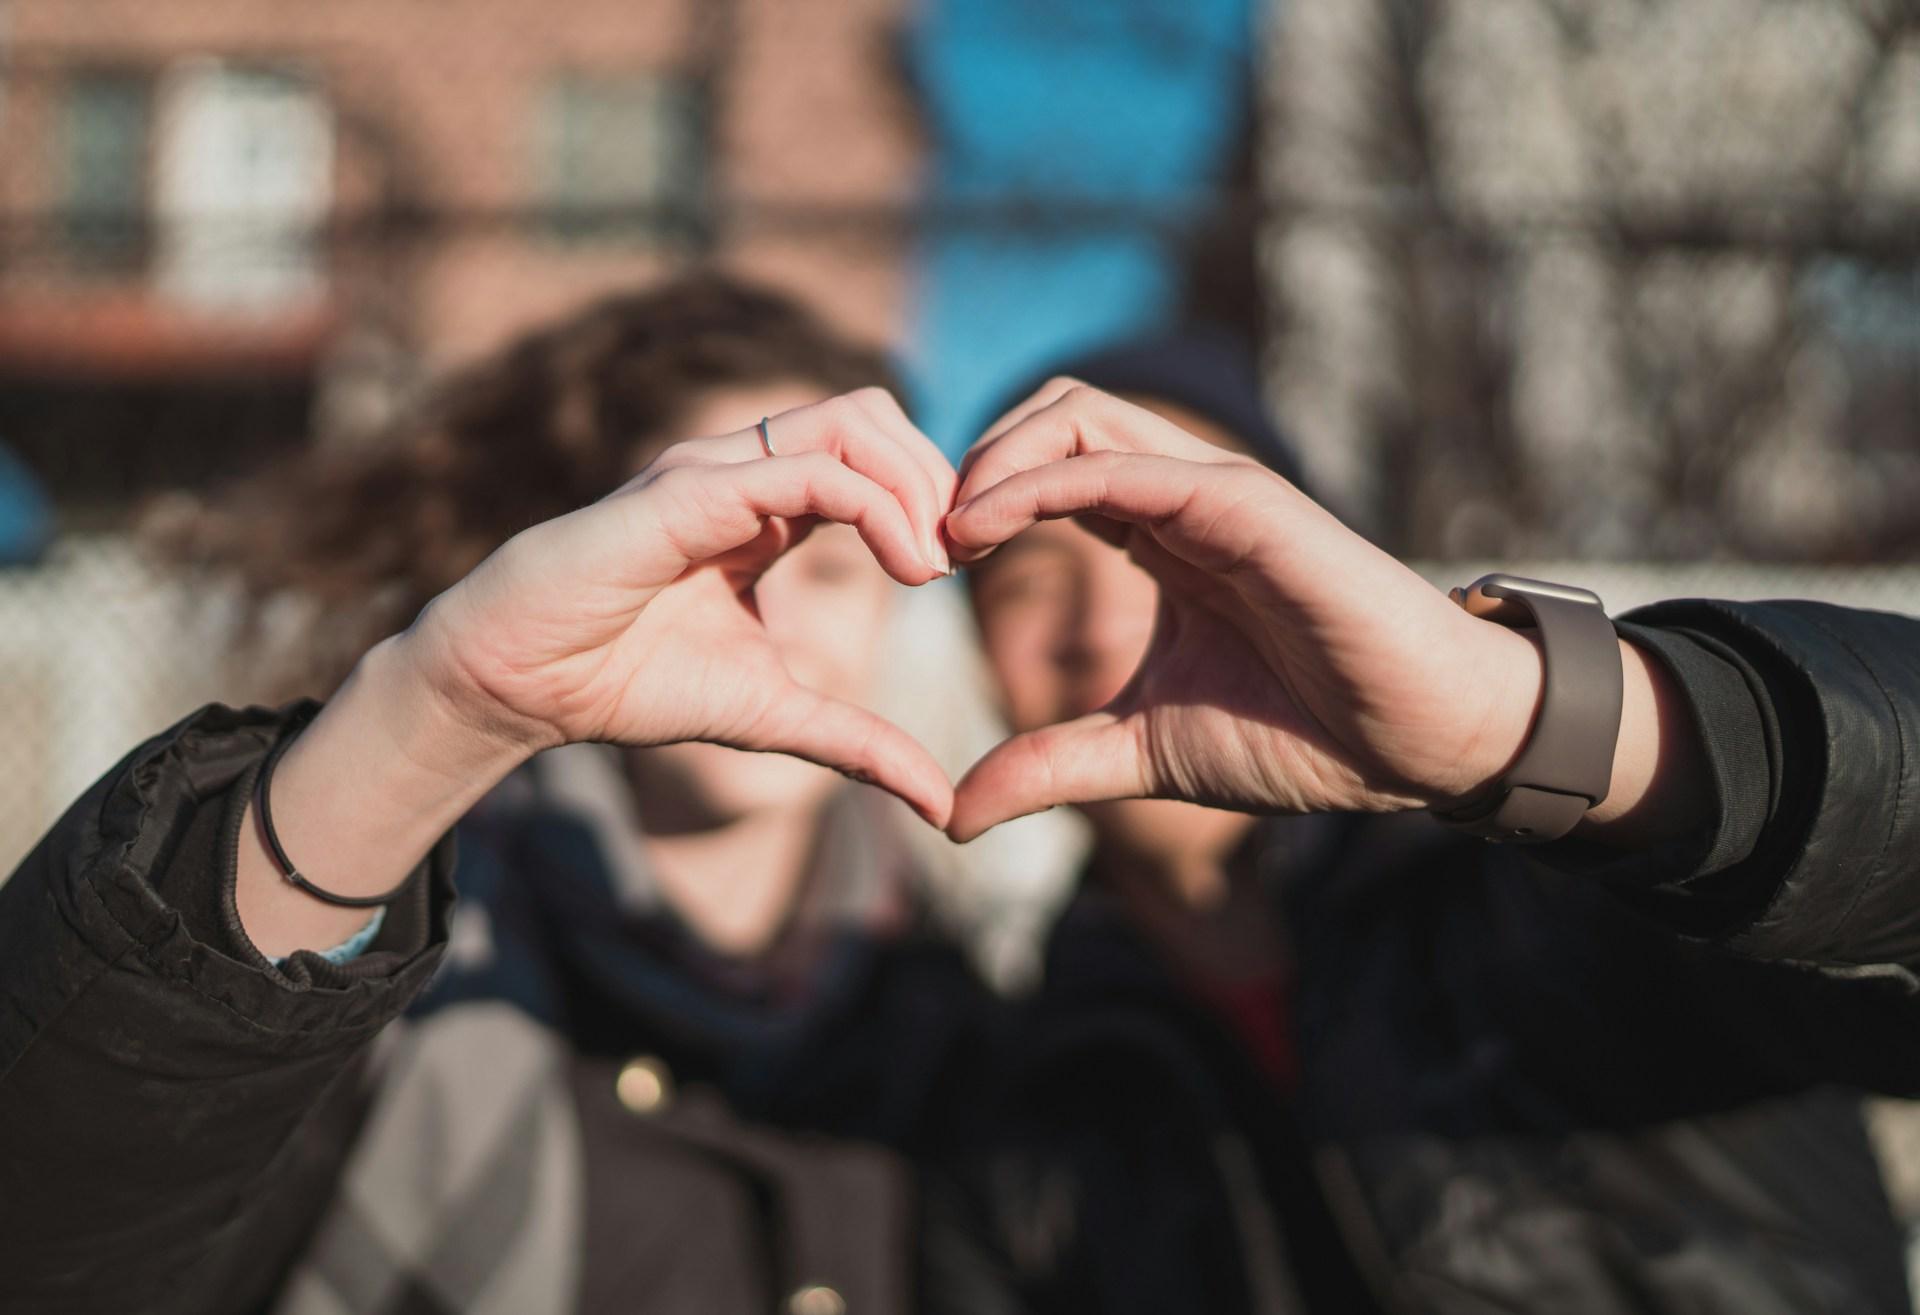 4 Heartfelt Valentine's Day Date Ideas That'll Make Your Partner's Heart Flutter